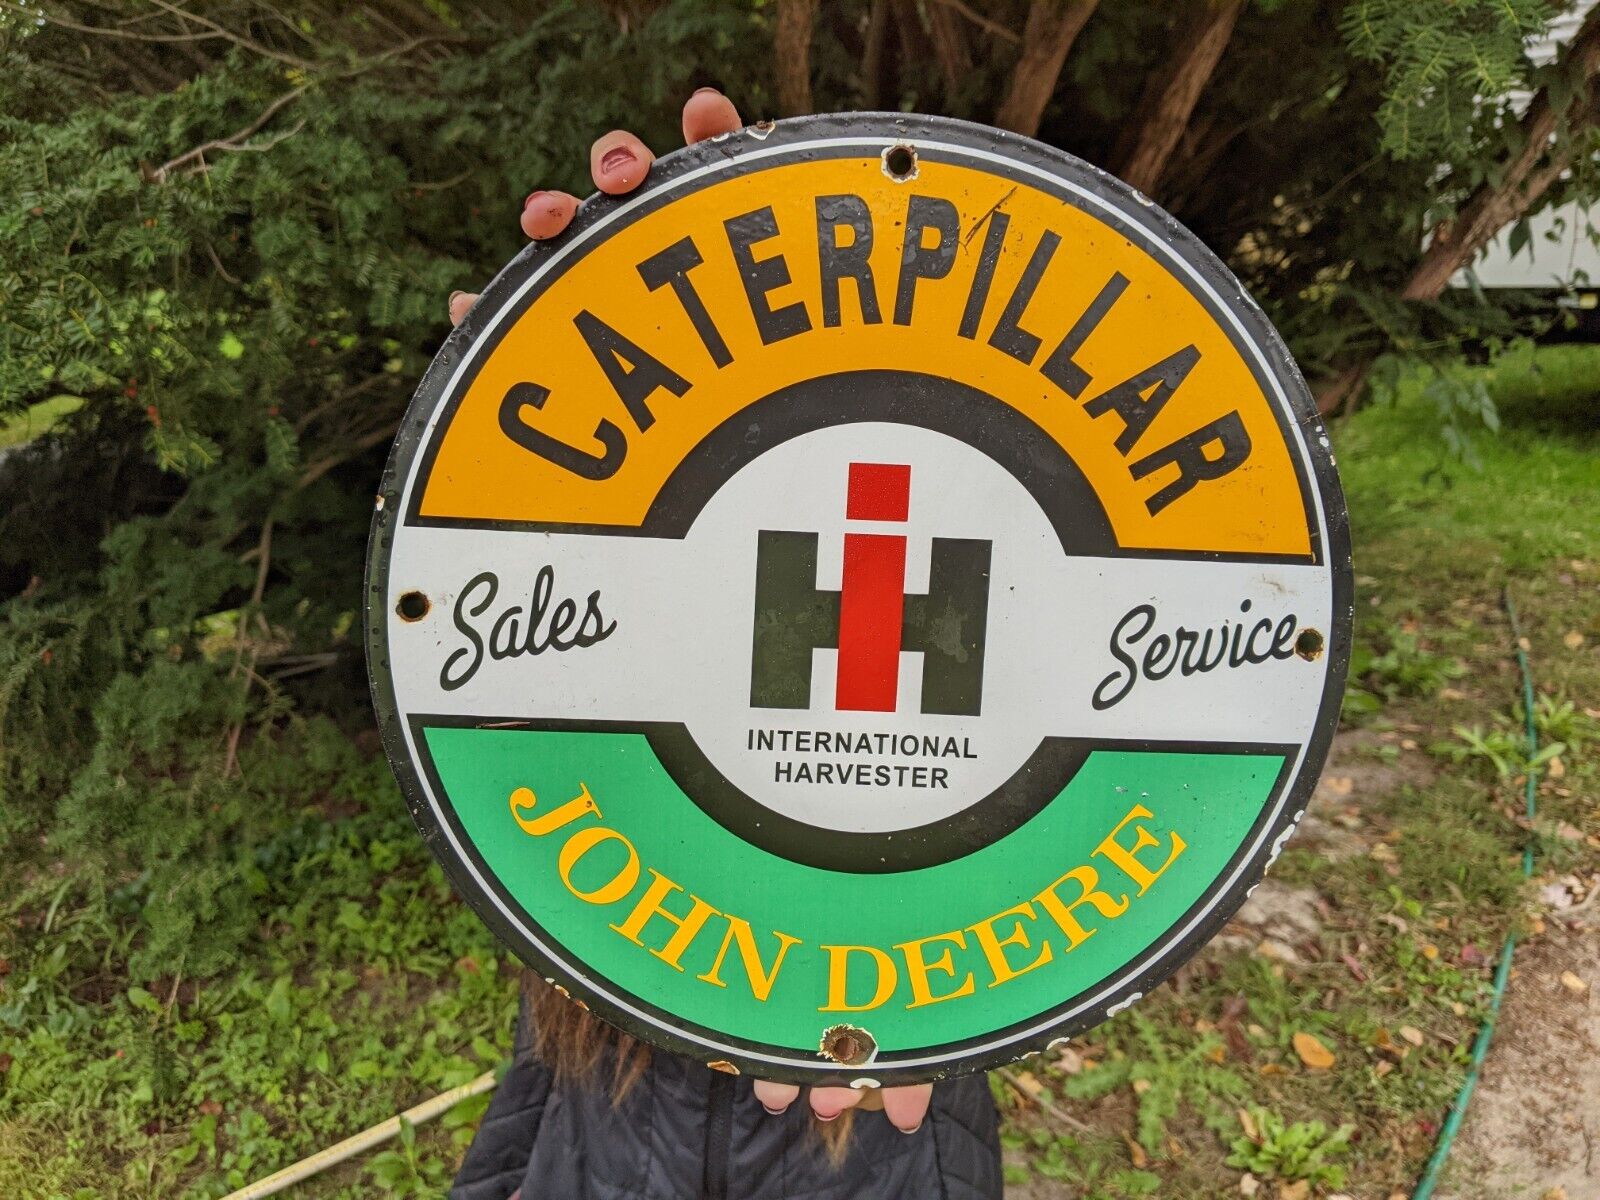 Vintage Caterpillar John Deere Porcelain Enamel Metal Sign Farm Tractor Farming